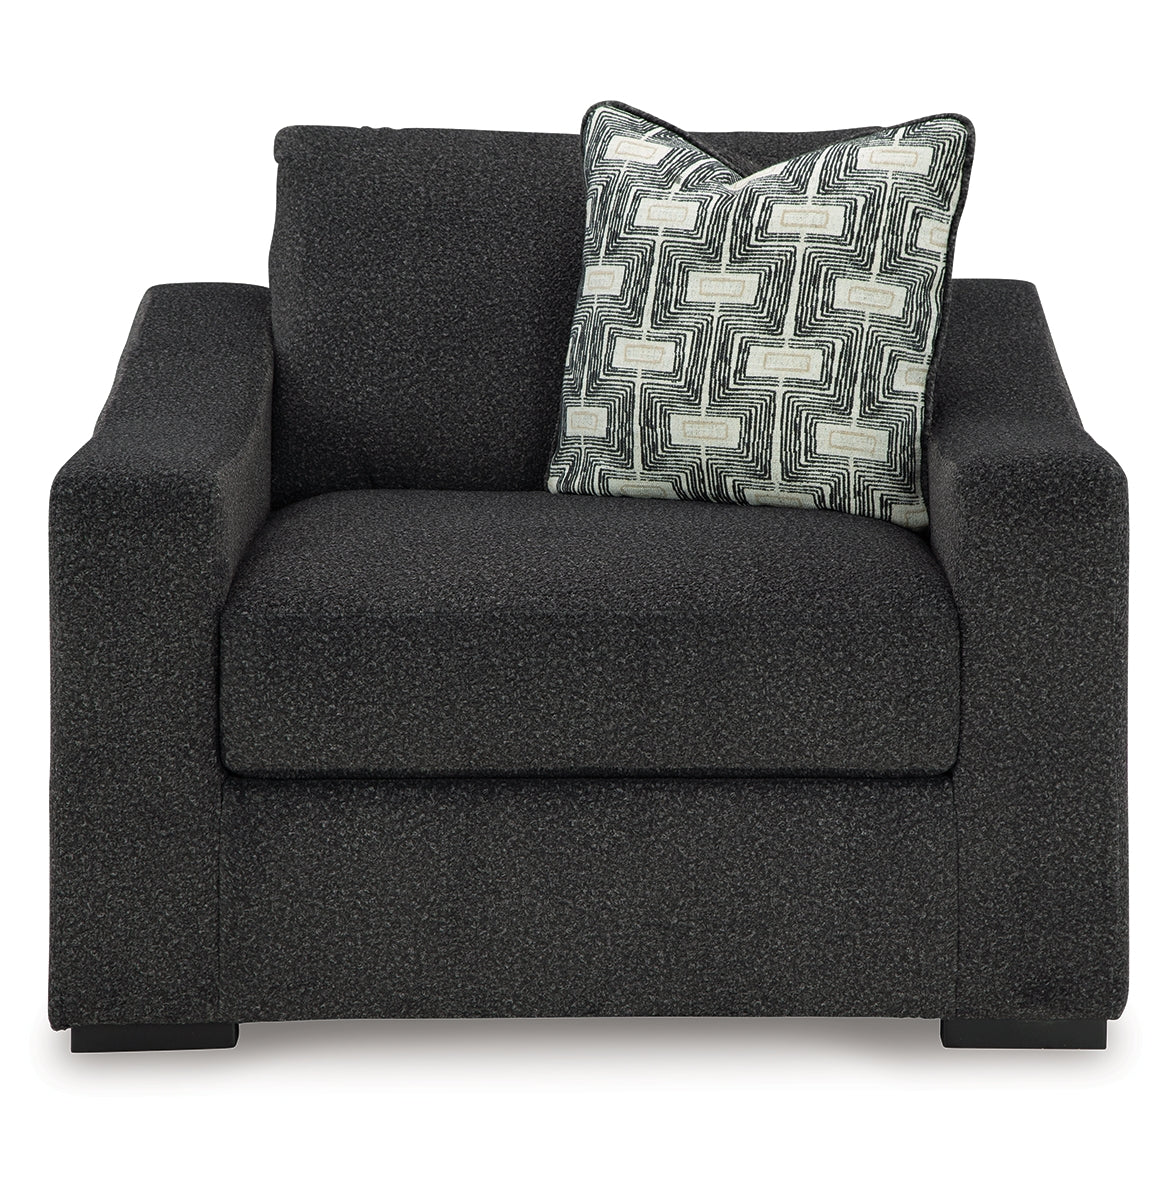 Wryenlynn Sofa, Loveseat, Chair and Ottoman